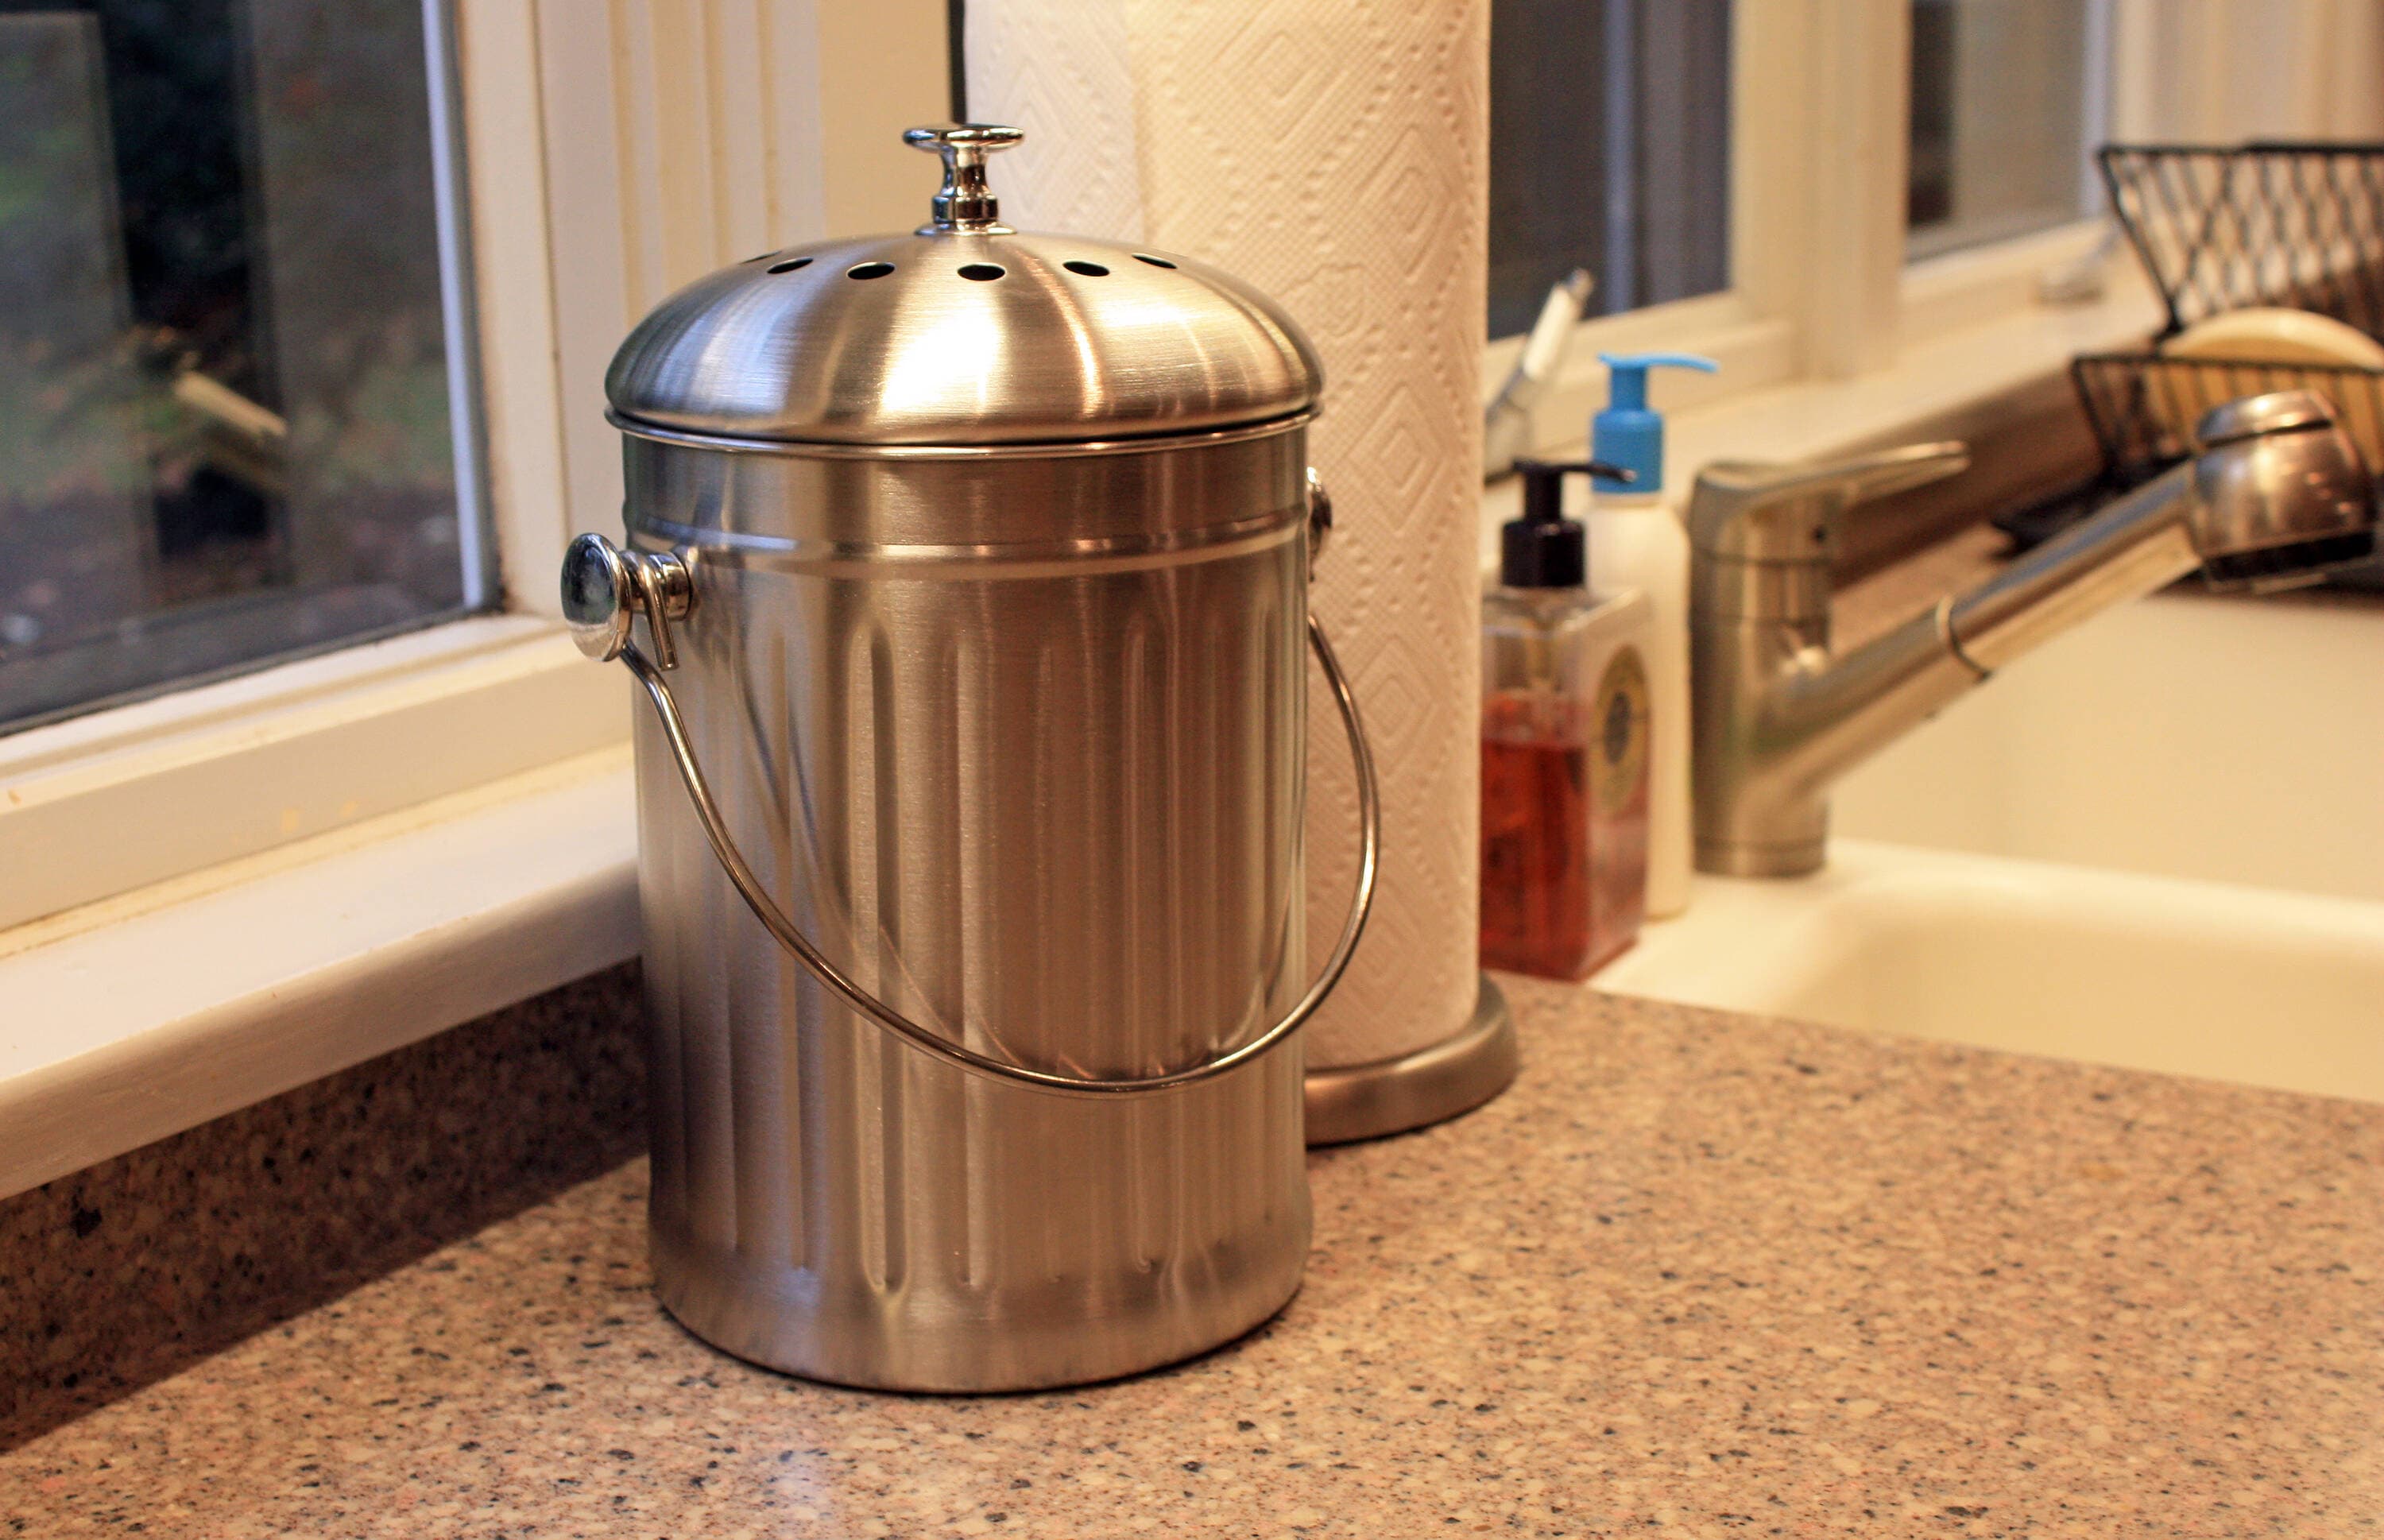 Joybos® Kitchen Countertop Compost Bin With Aromatherapy – JBSTT